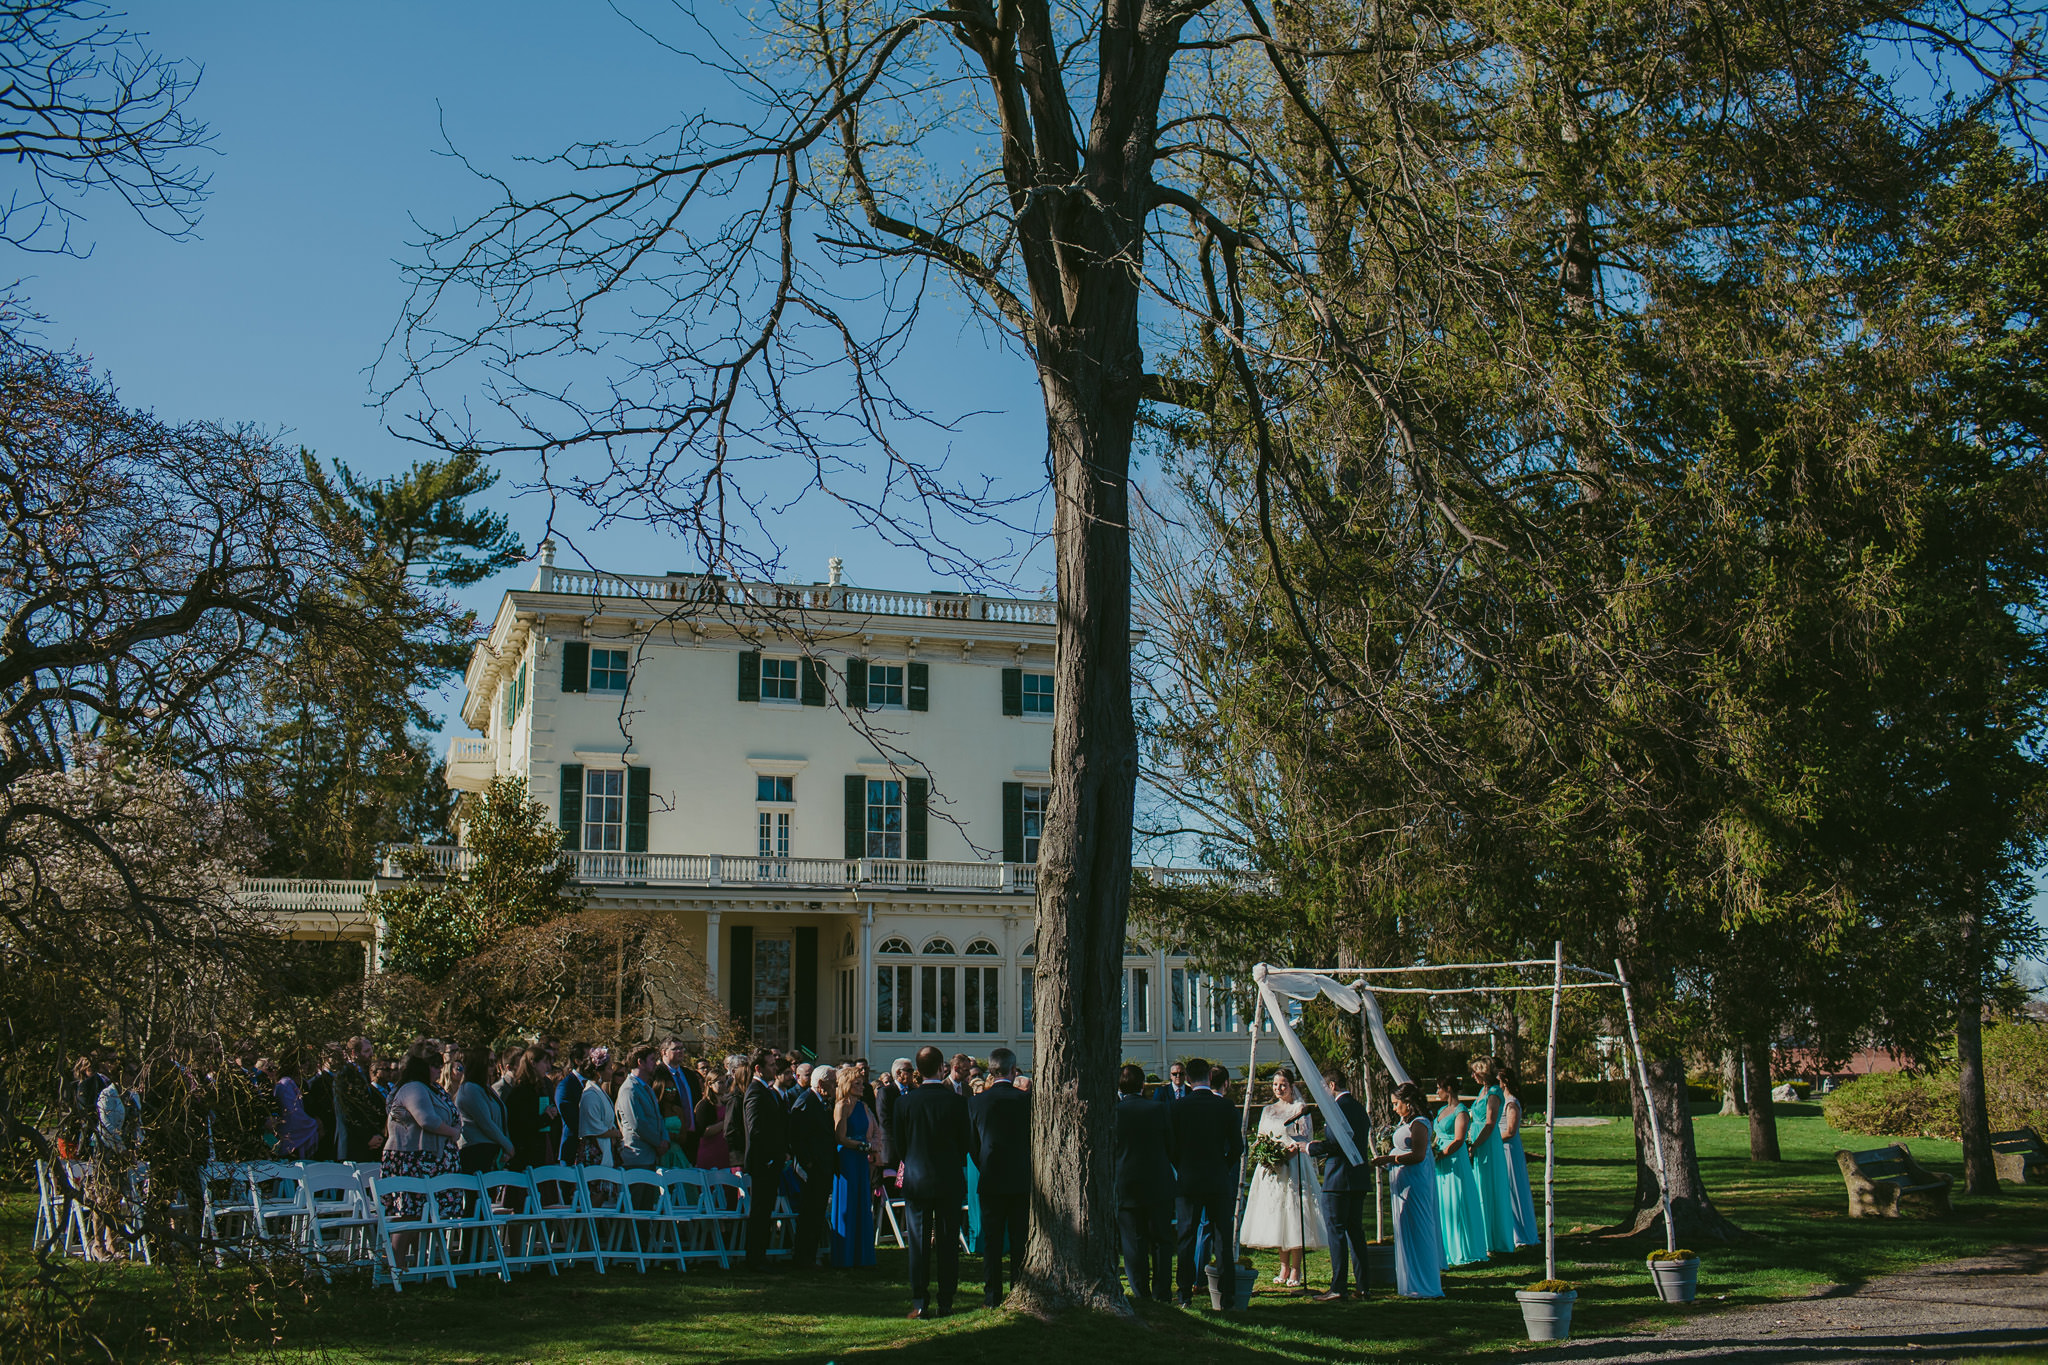 Glen Foerd on the Delaware makes a stunning backdrop for this garden wedding